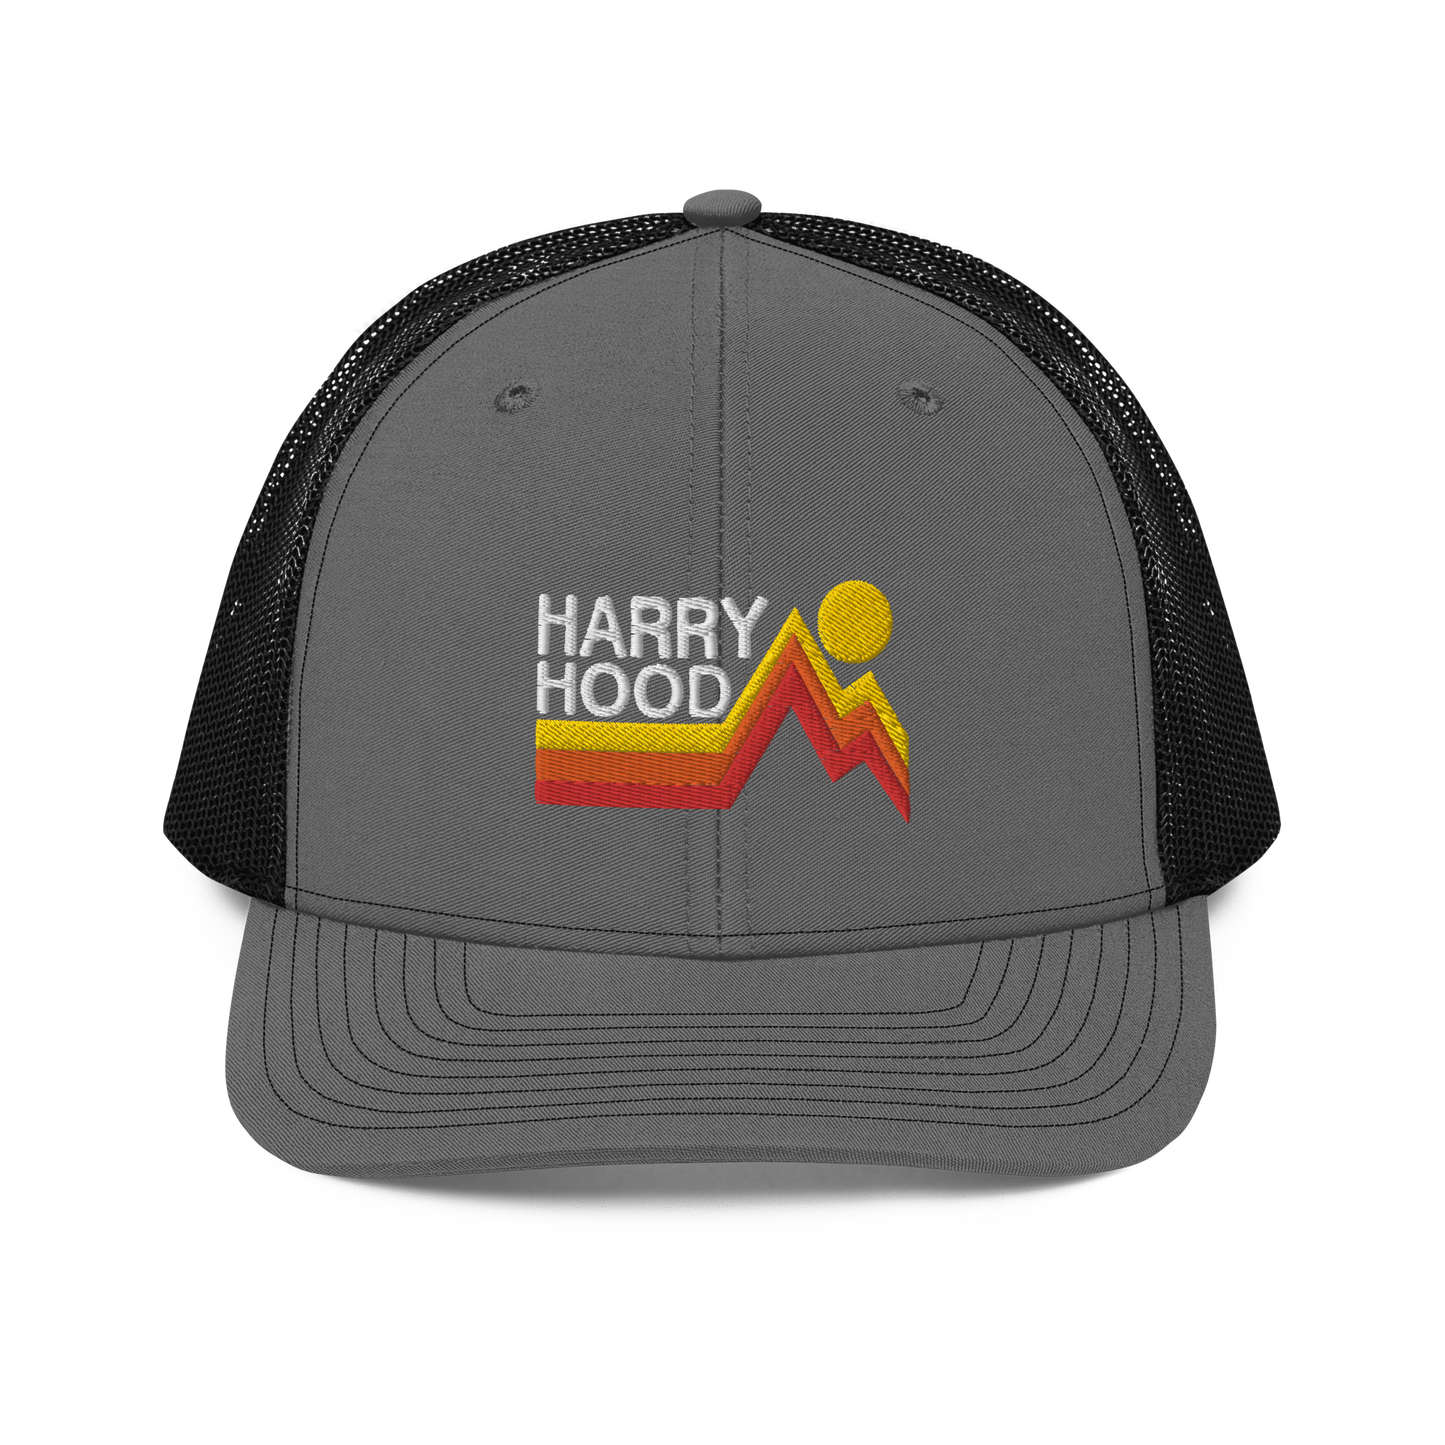 Harry Hood Embroidery 112 Snapback